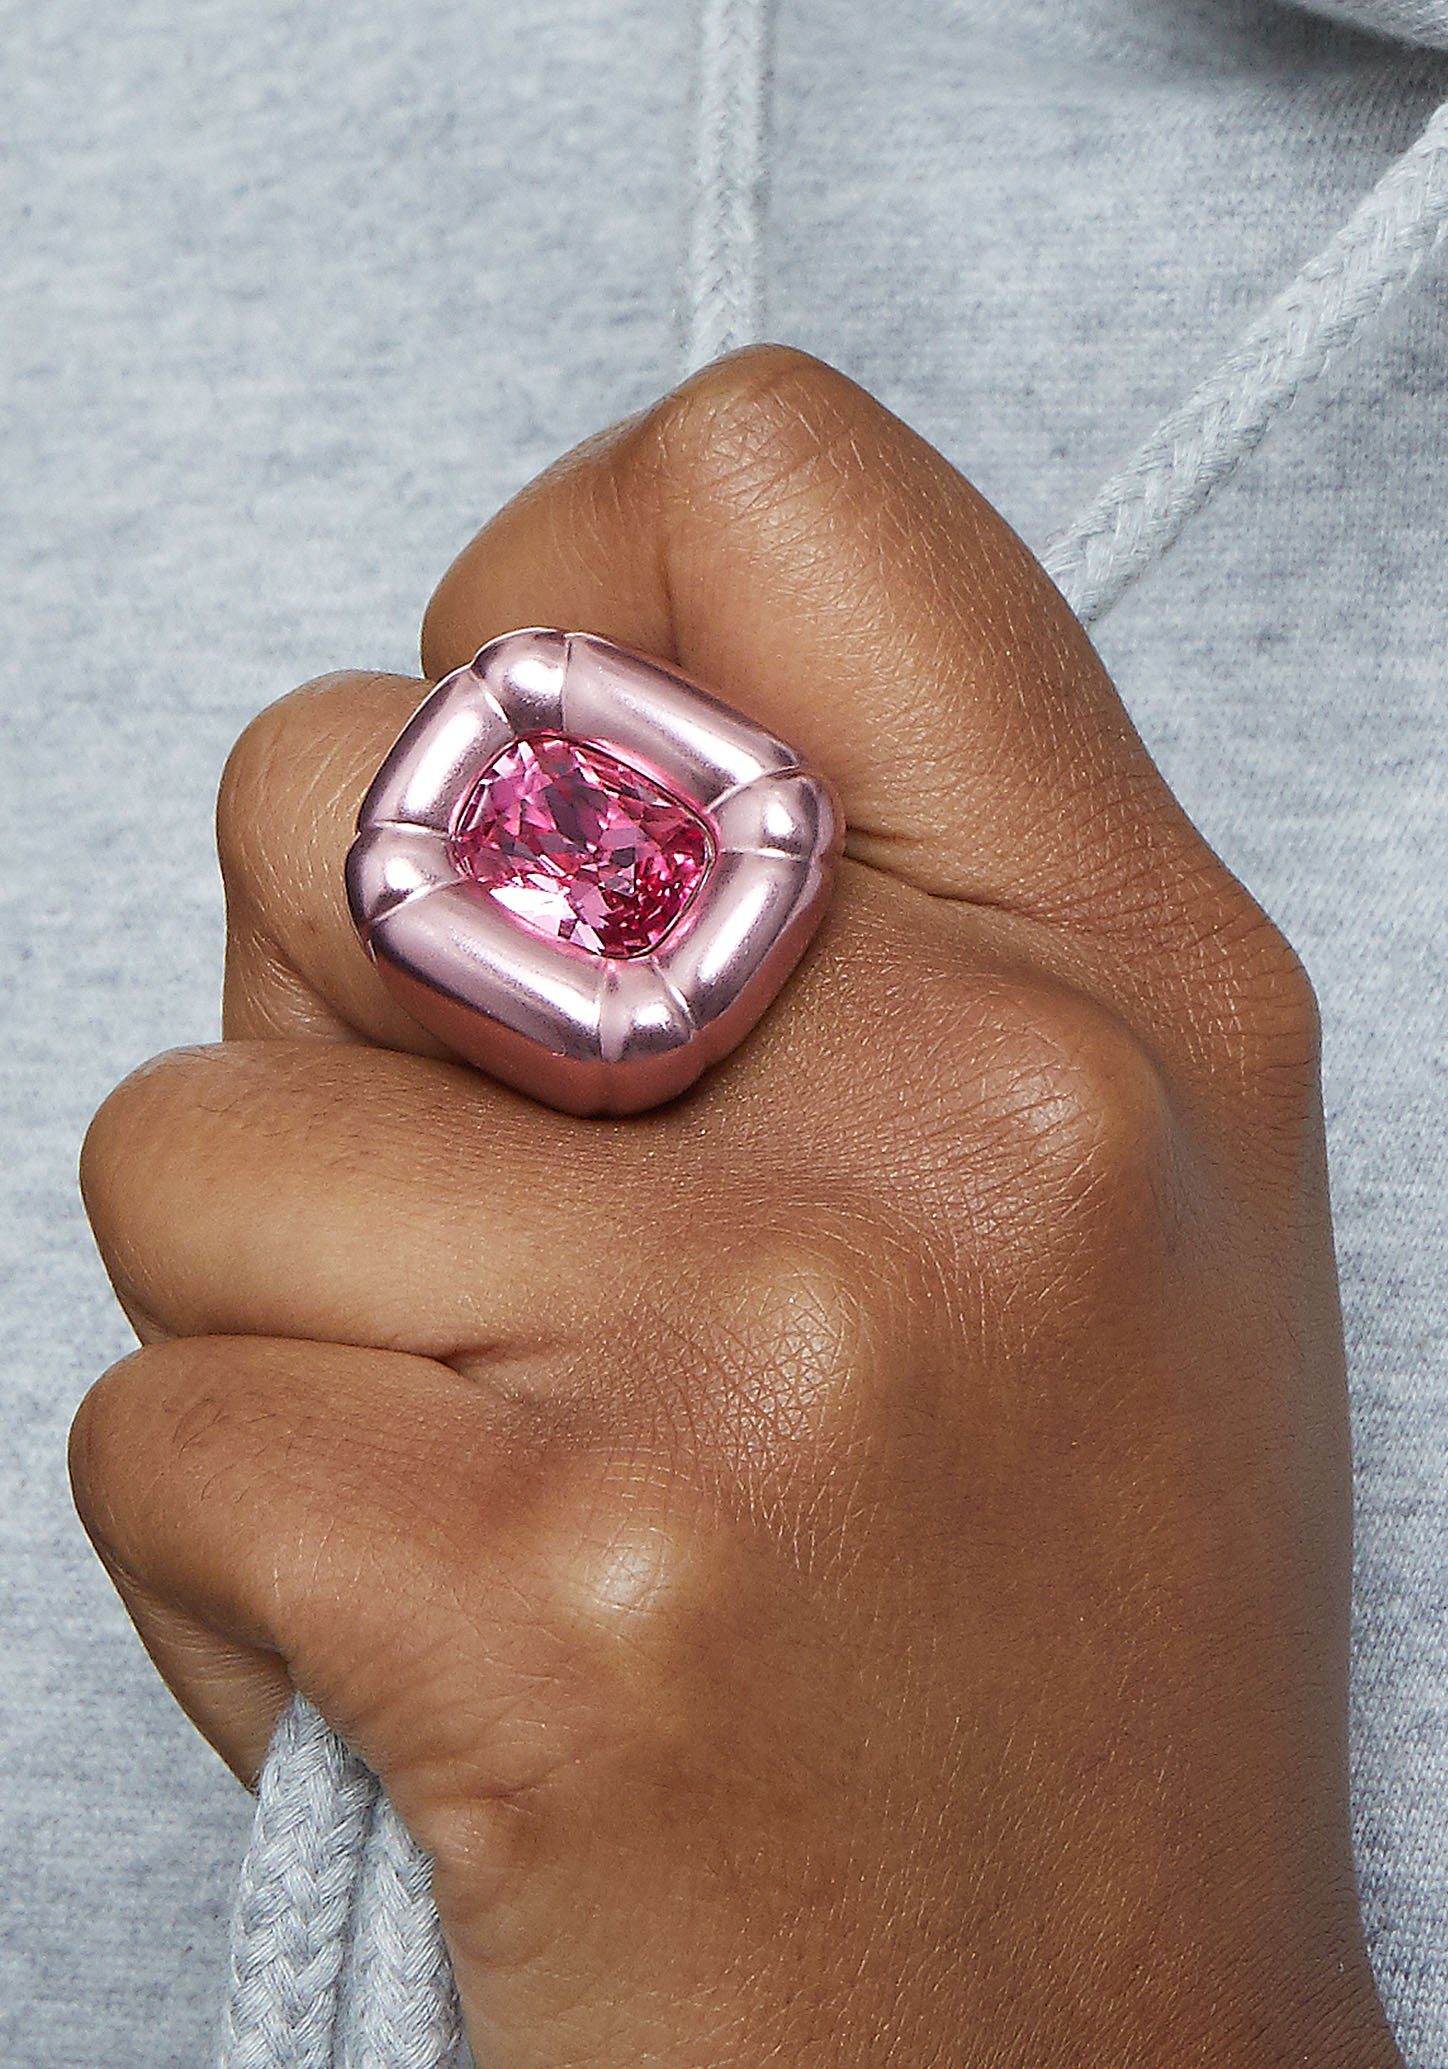 Swarovski Fingerring mit Swarovski® Kristall Ring, Dulcis 5610803,5609721, rosa-pink Cocktail 5610804,5609725